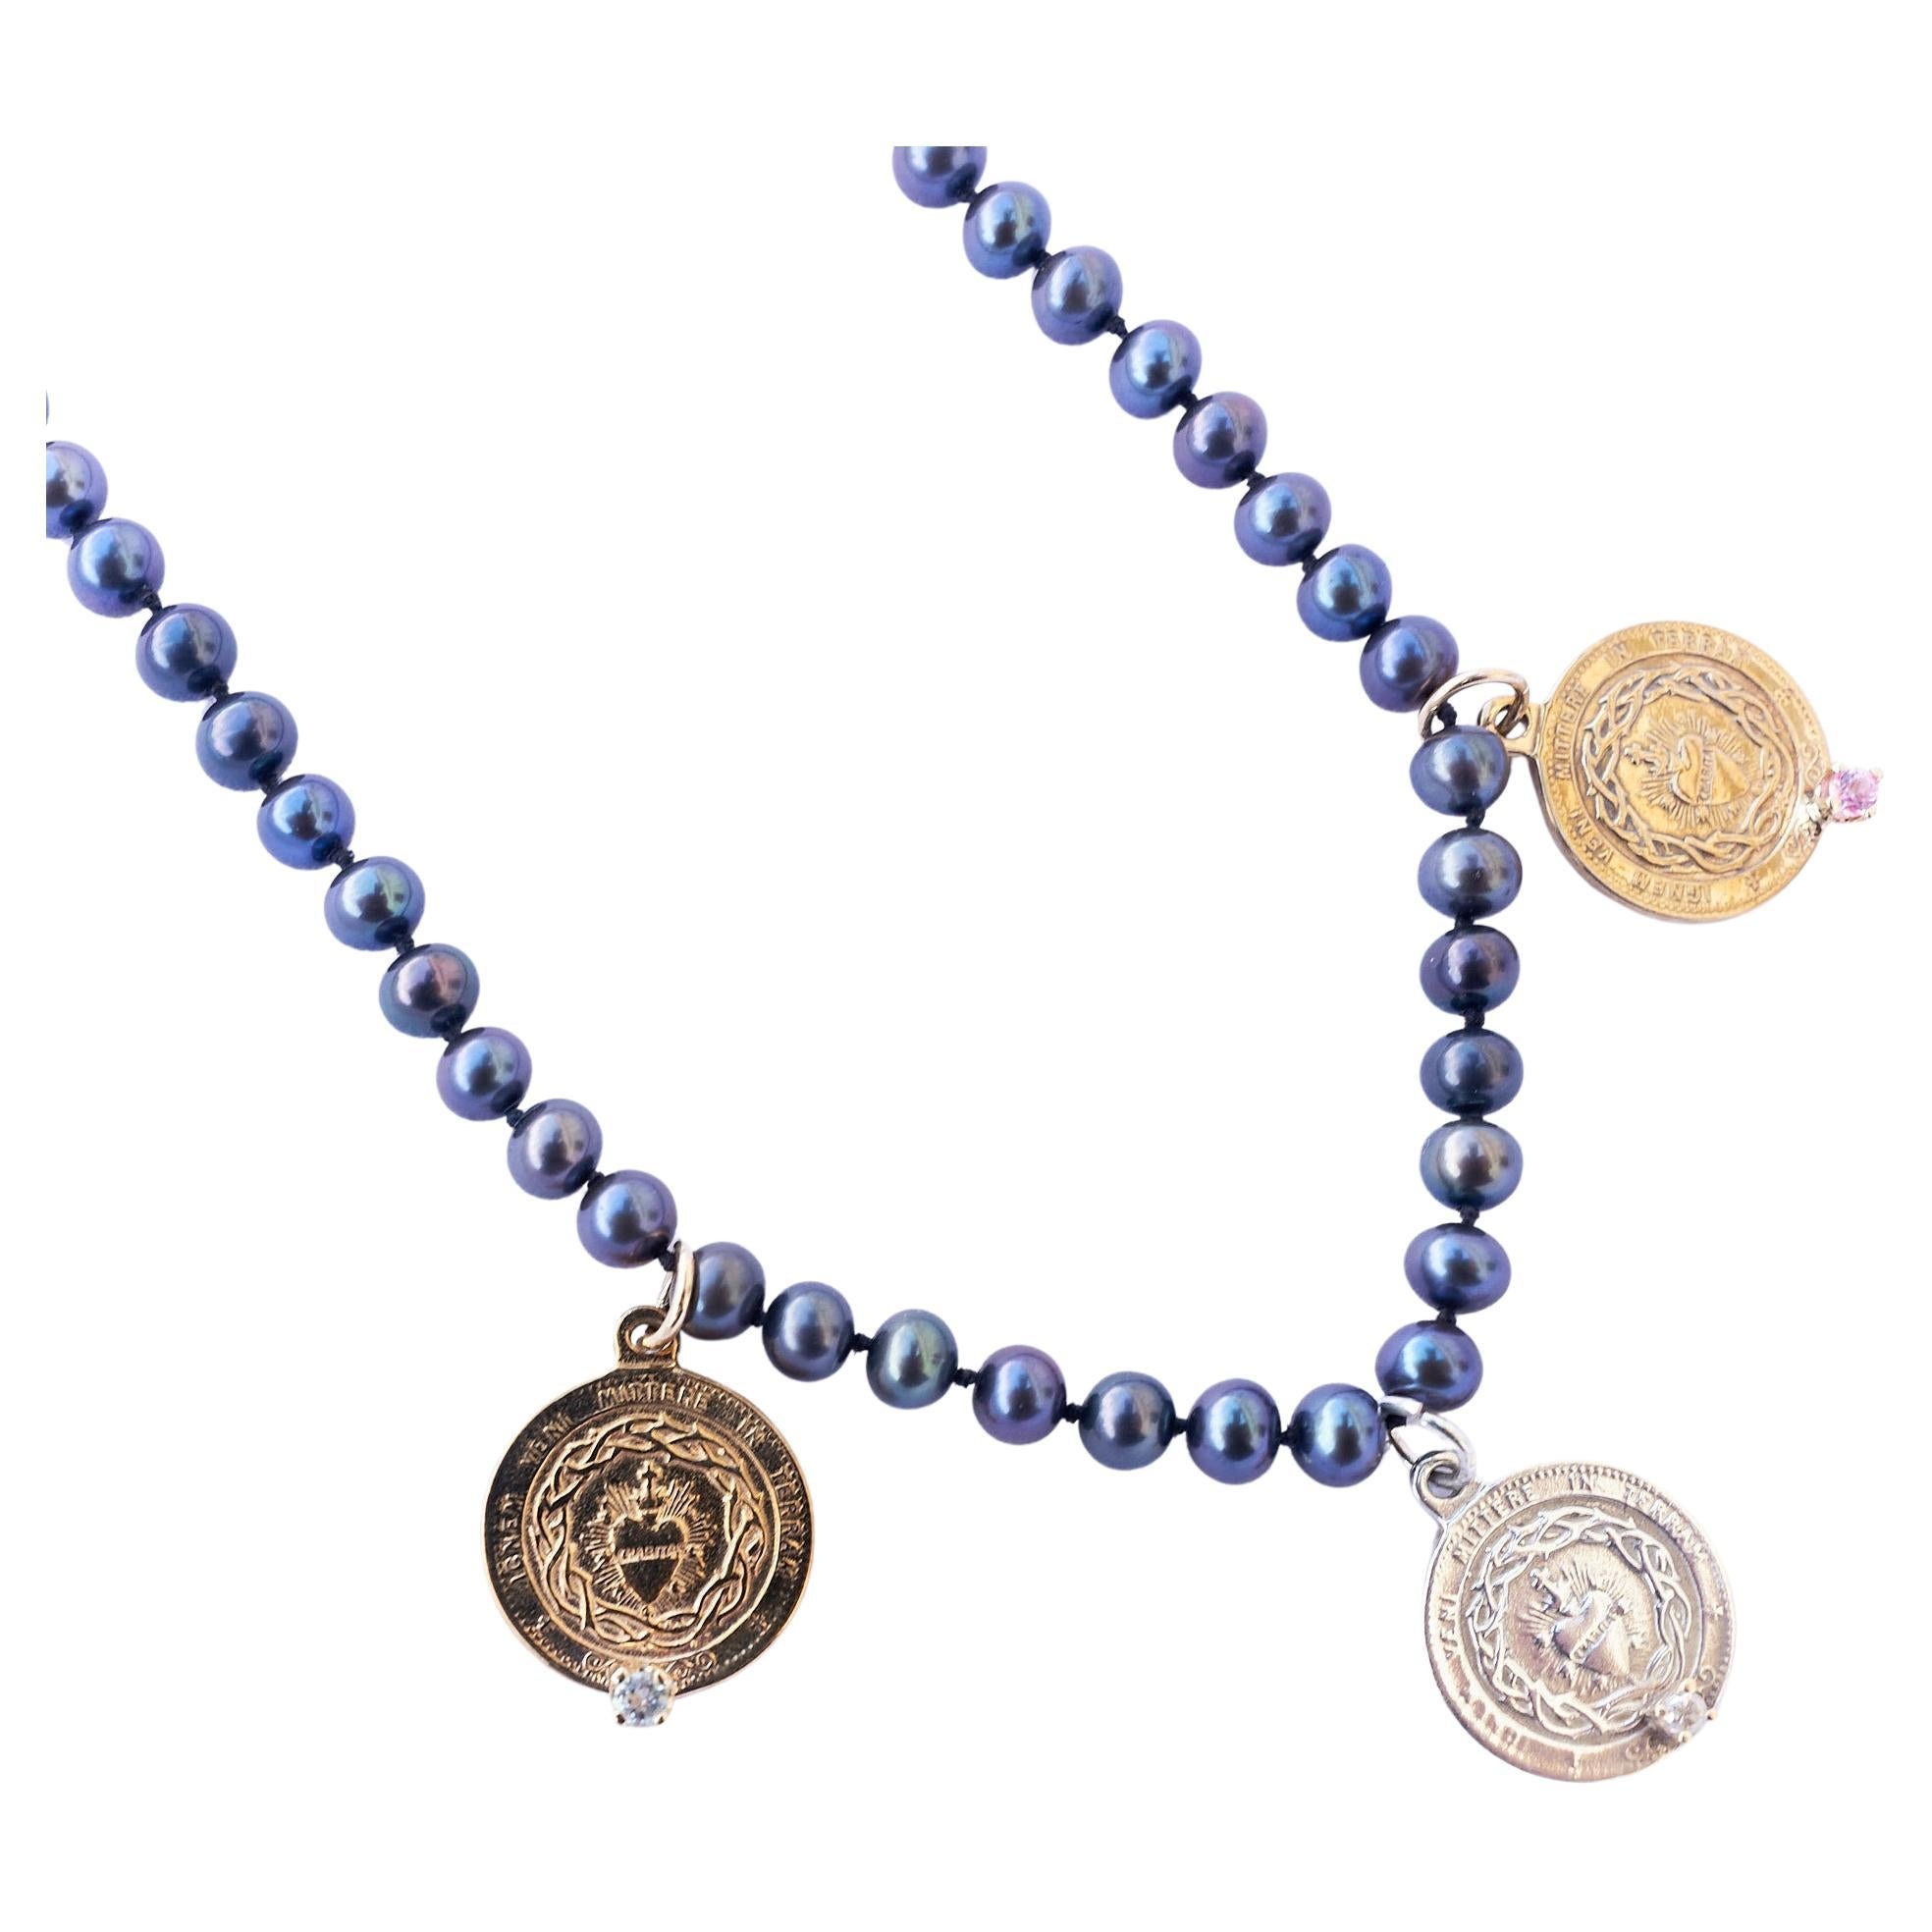 Sapphire Aquamarine Heart Medal Necklace Black Pearl Silver Bronze J Dauphin
18